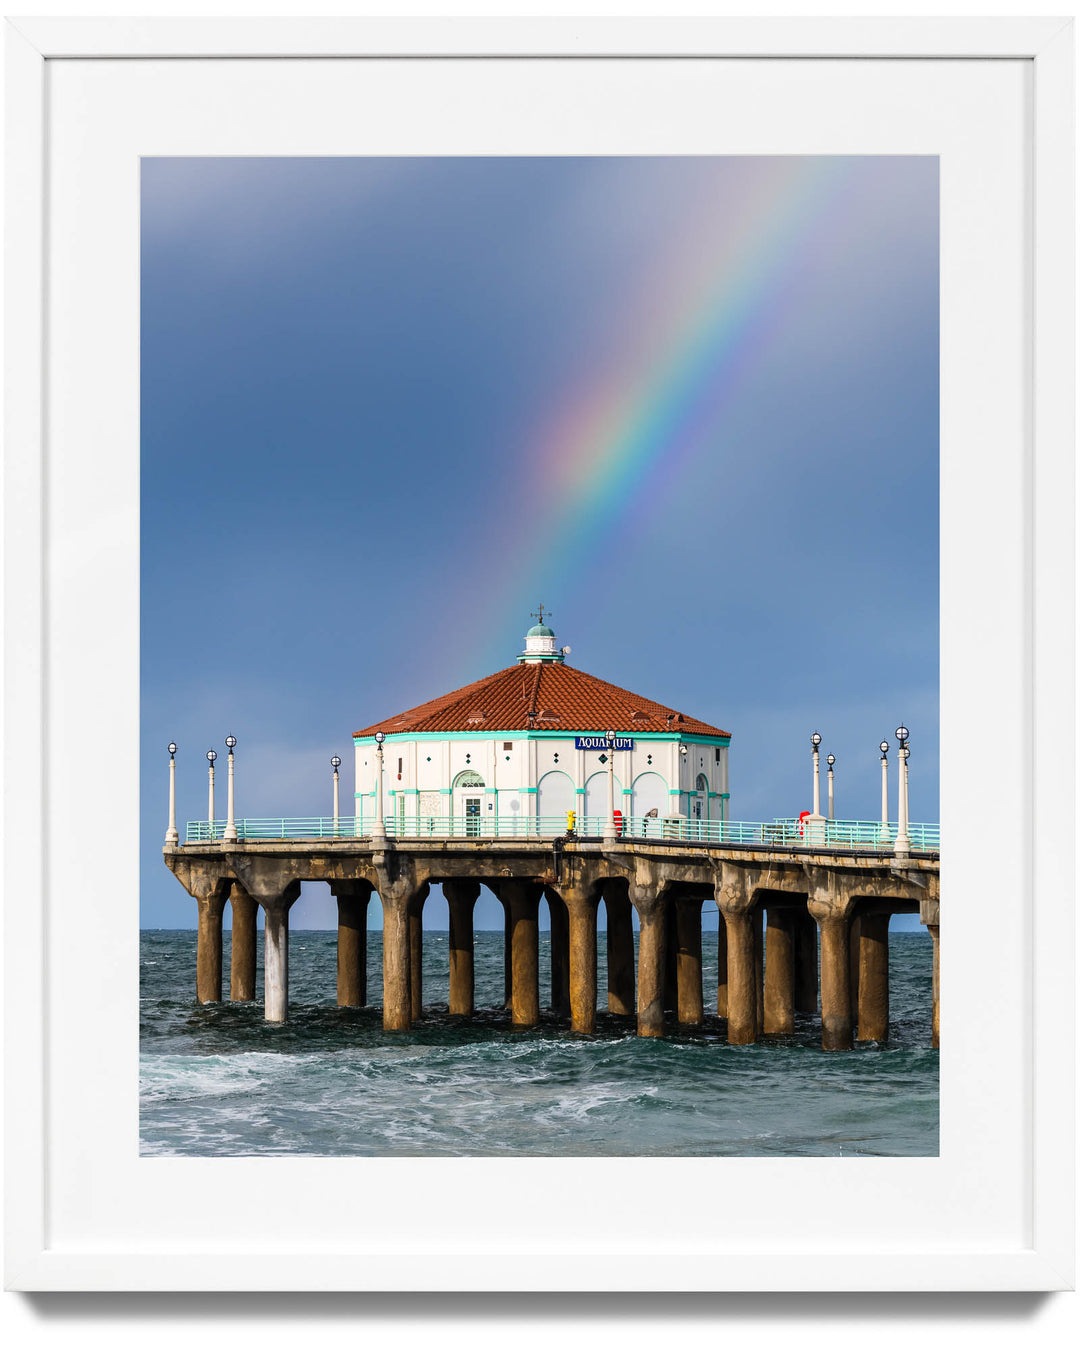 Framed print of a rainbow behind the Manhattan Beach Pier